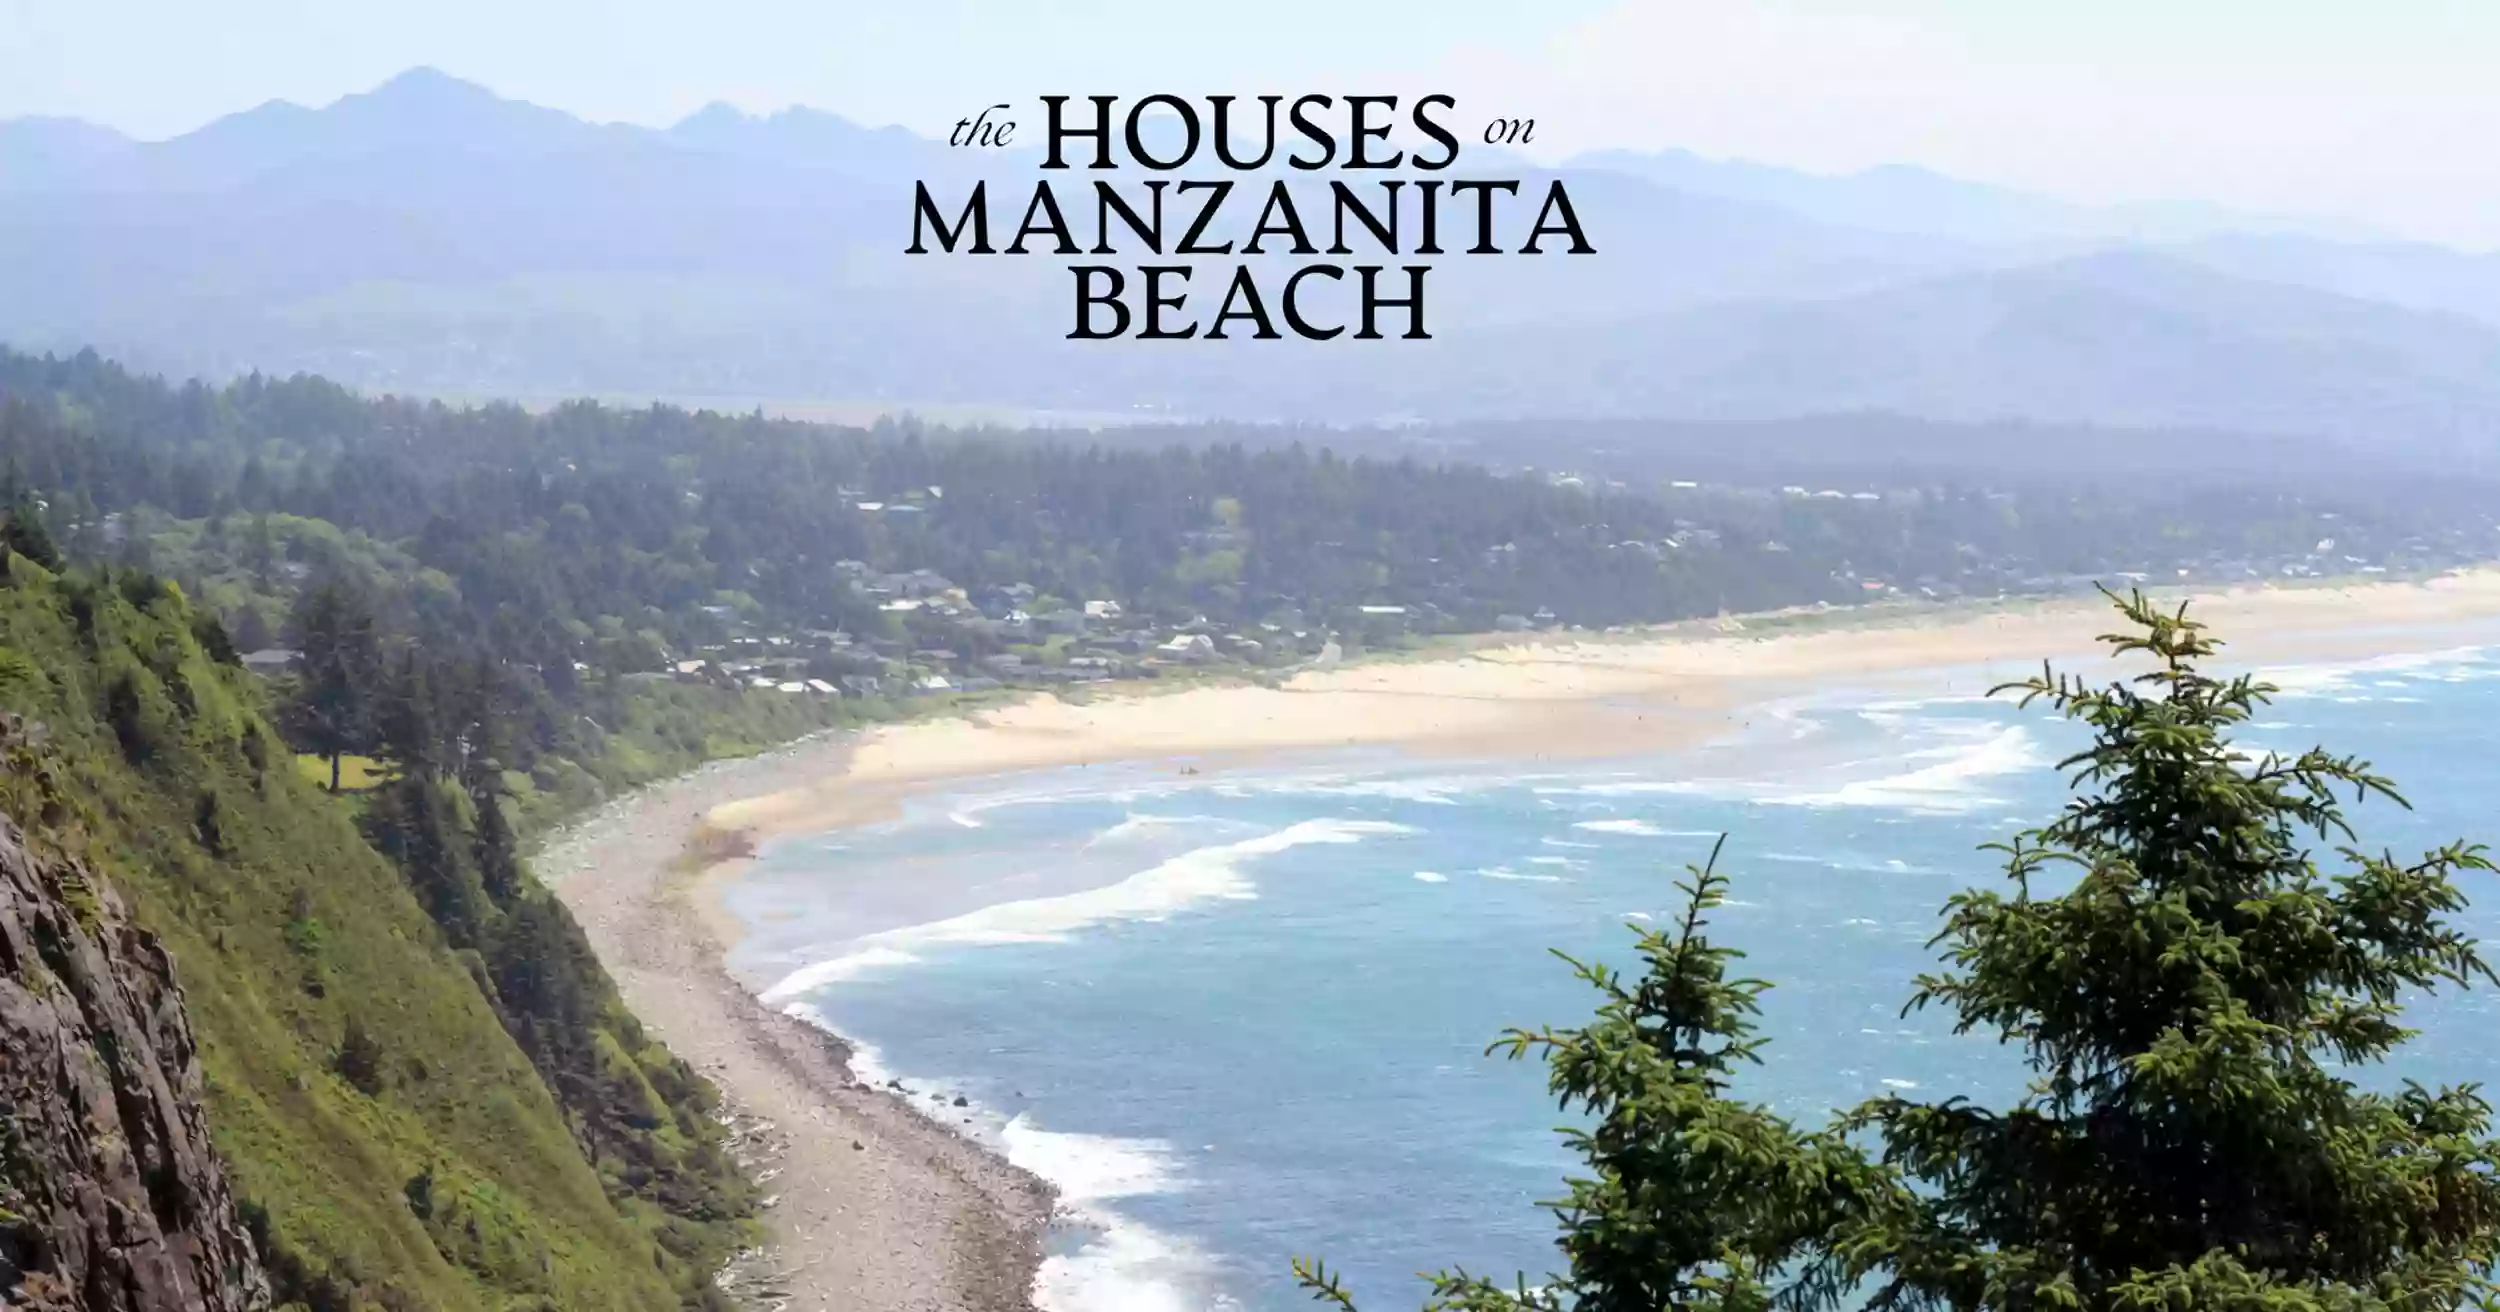 The Houses On Manzanita Beach